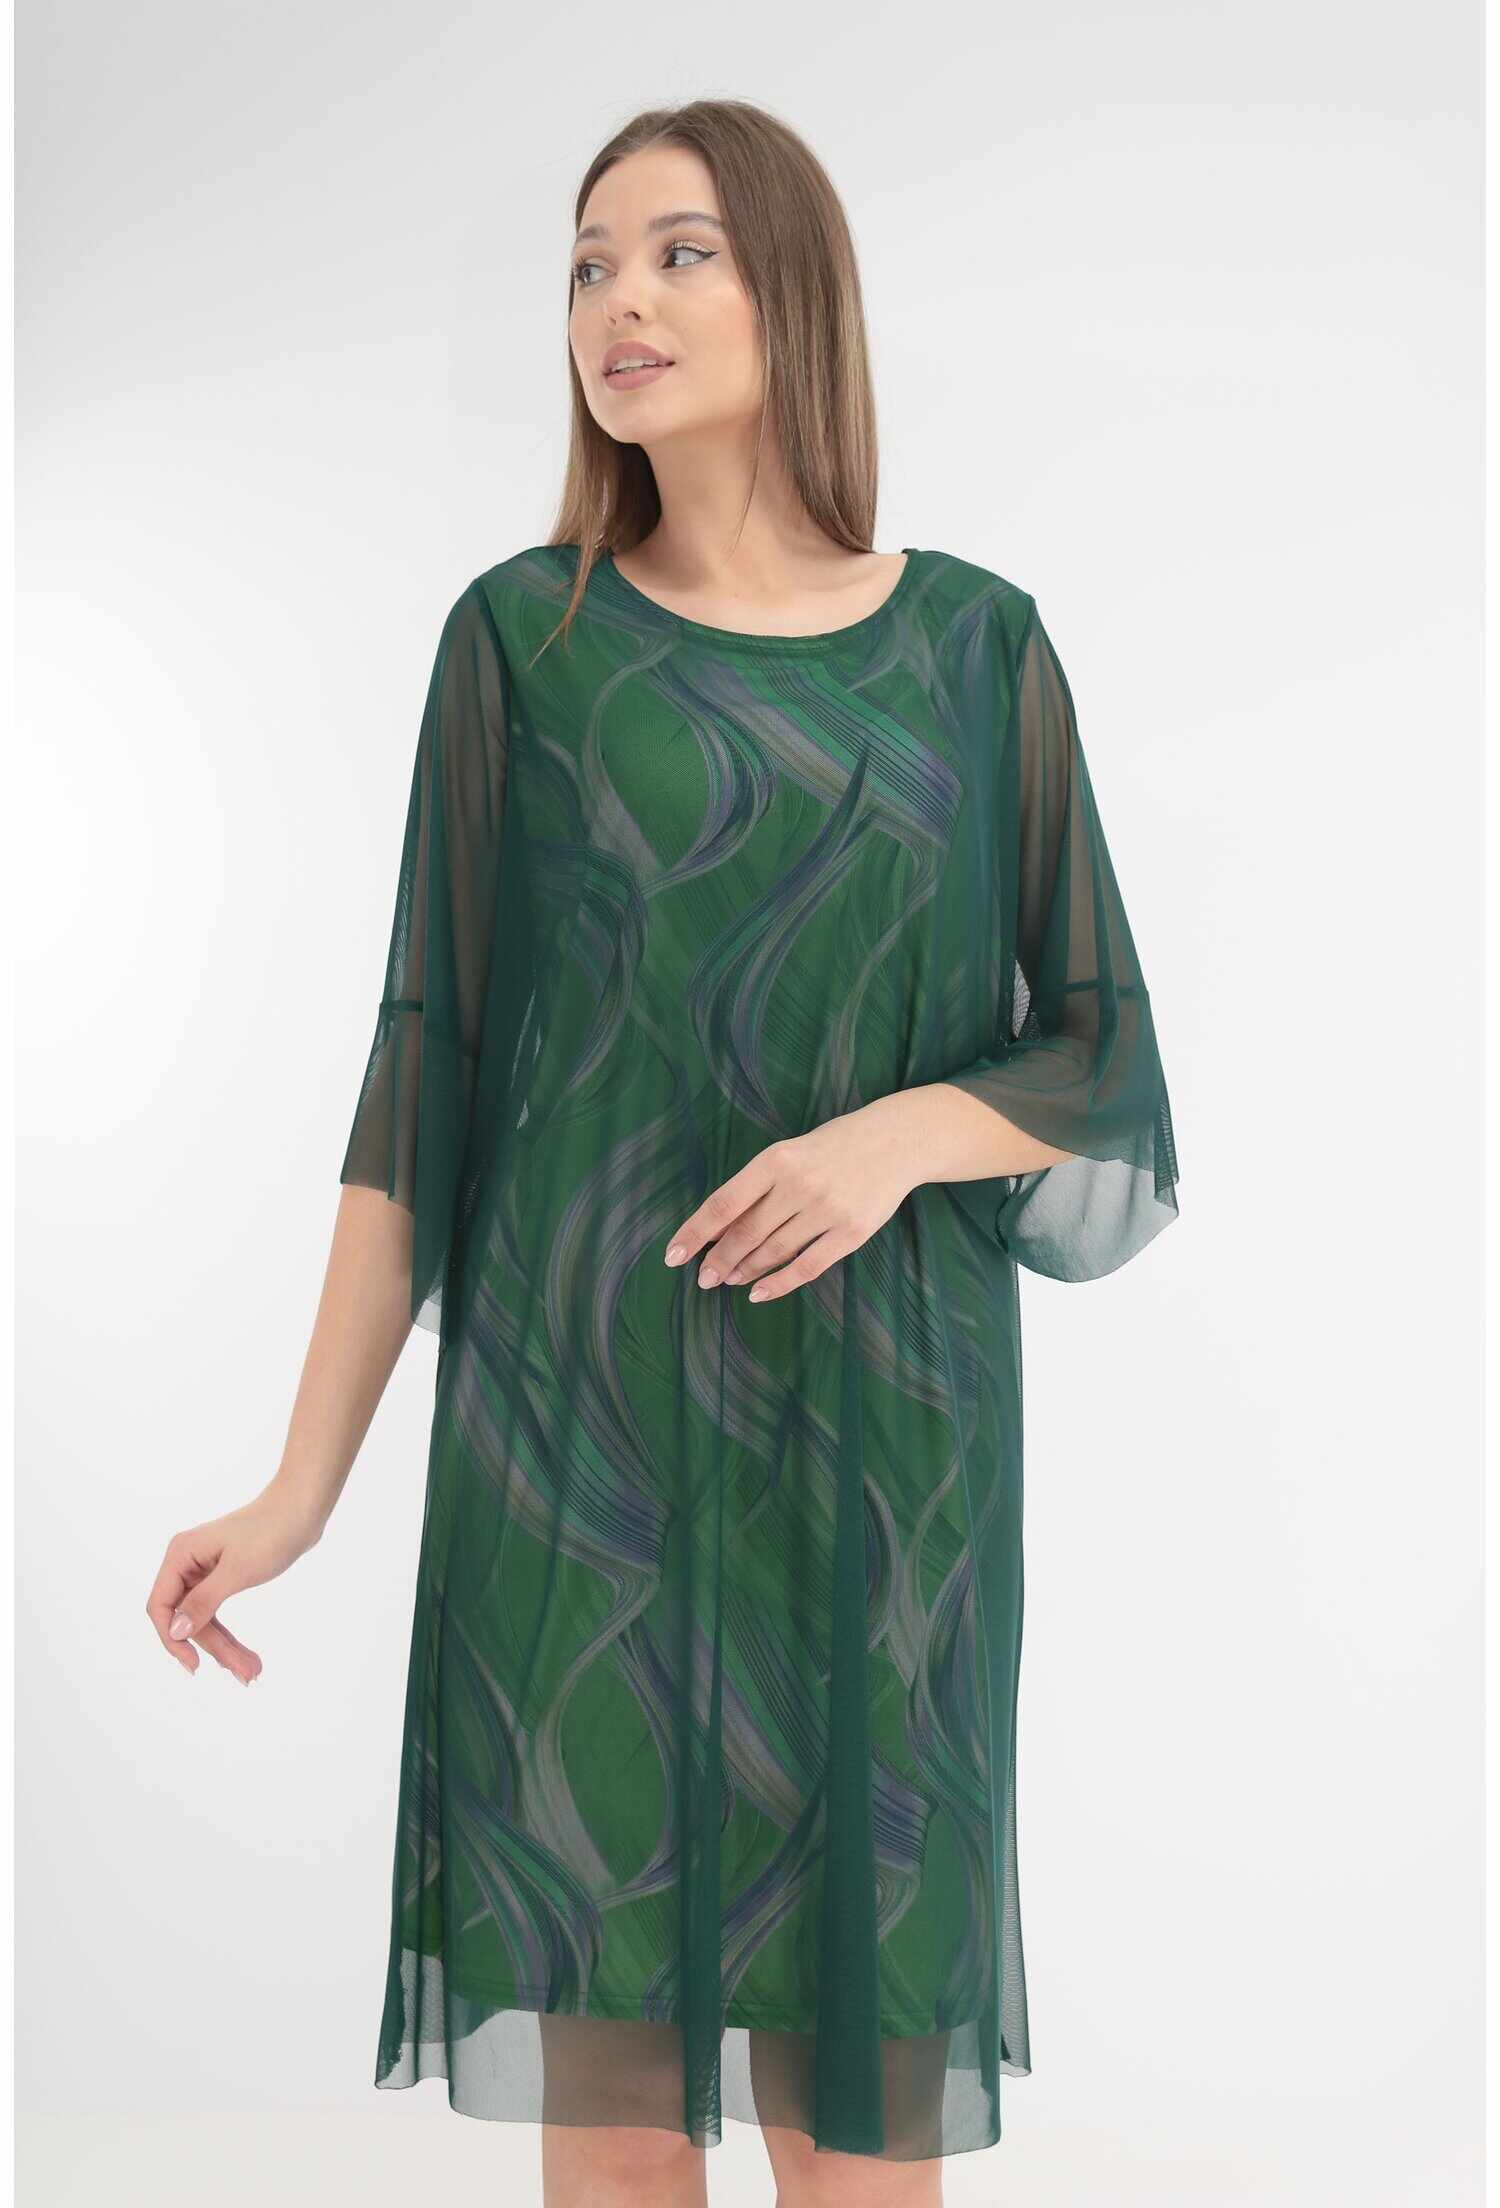 Rochie eleganta cu imprimeu abstract verde-mov si tulle verde